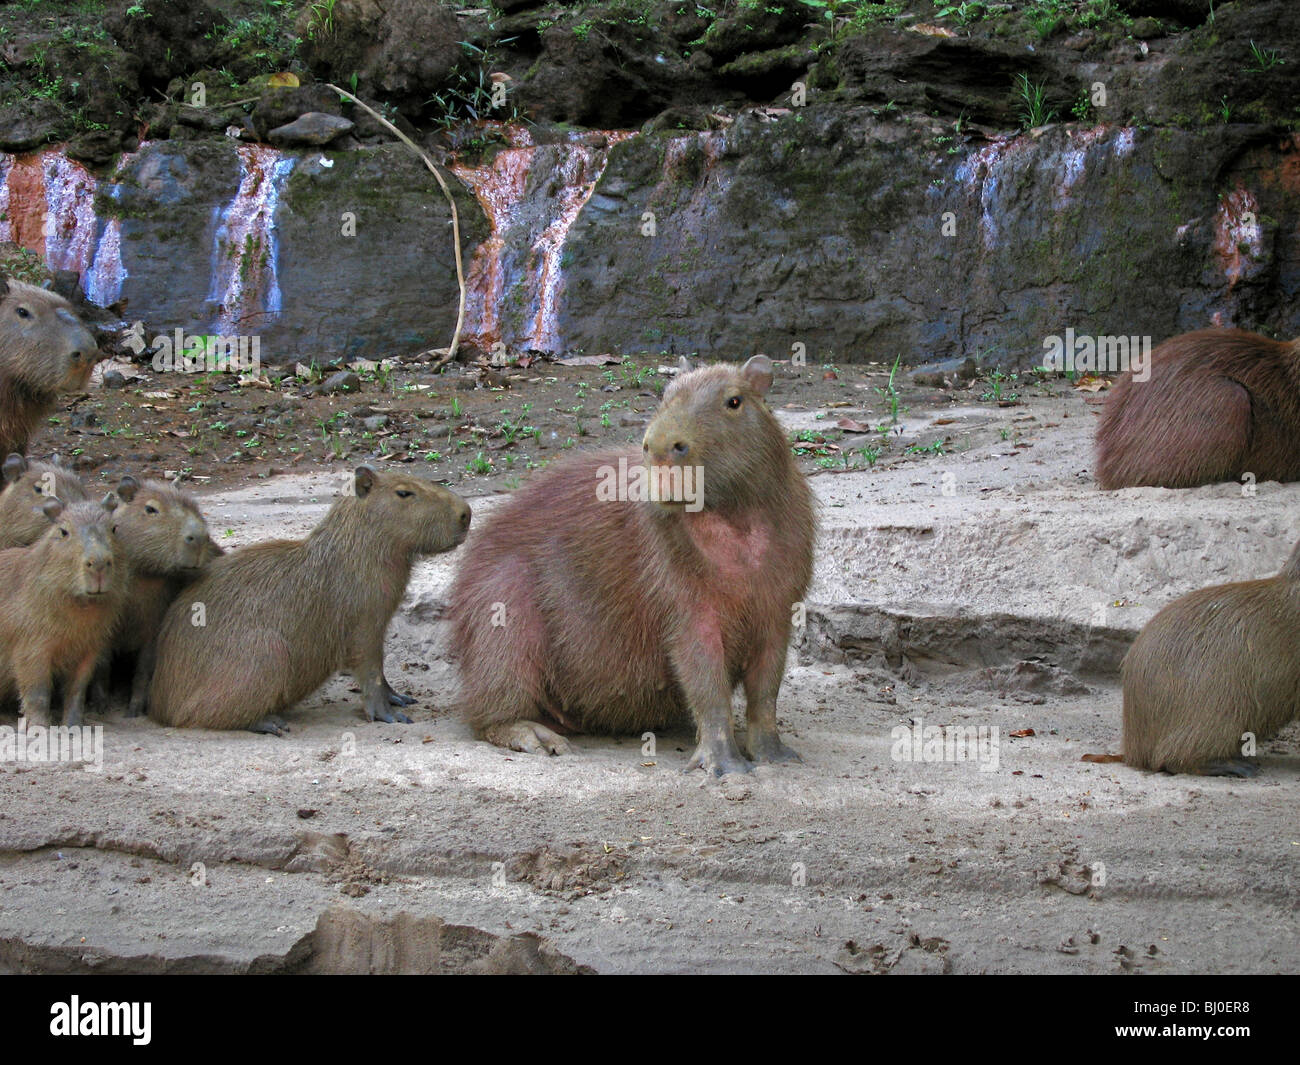 The capybara, the world's largest rodent, as seen in Peru's Tambopata National Reserve near Puerto Maldonado. Stock Photo